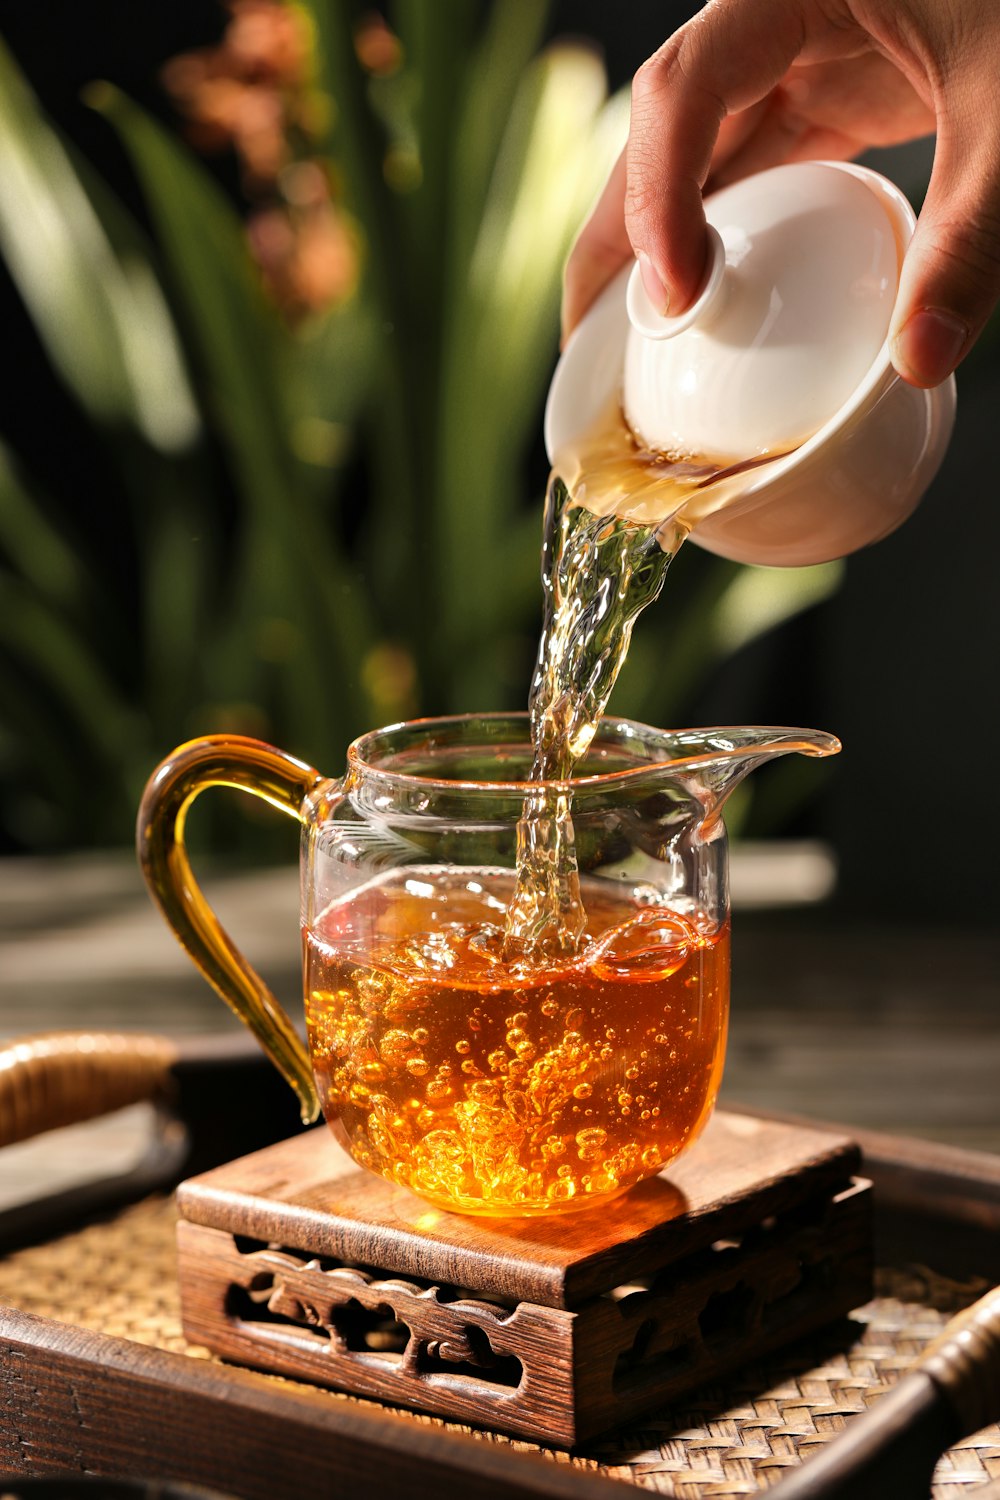 a person pouring tea into a glass teapot